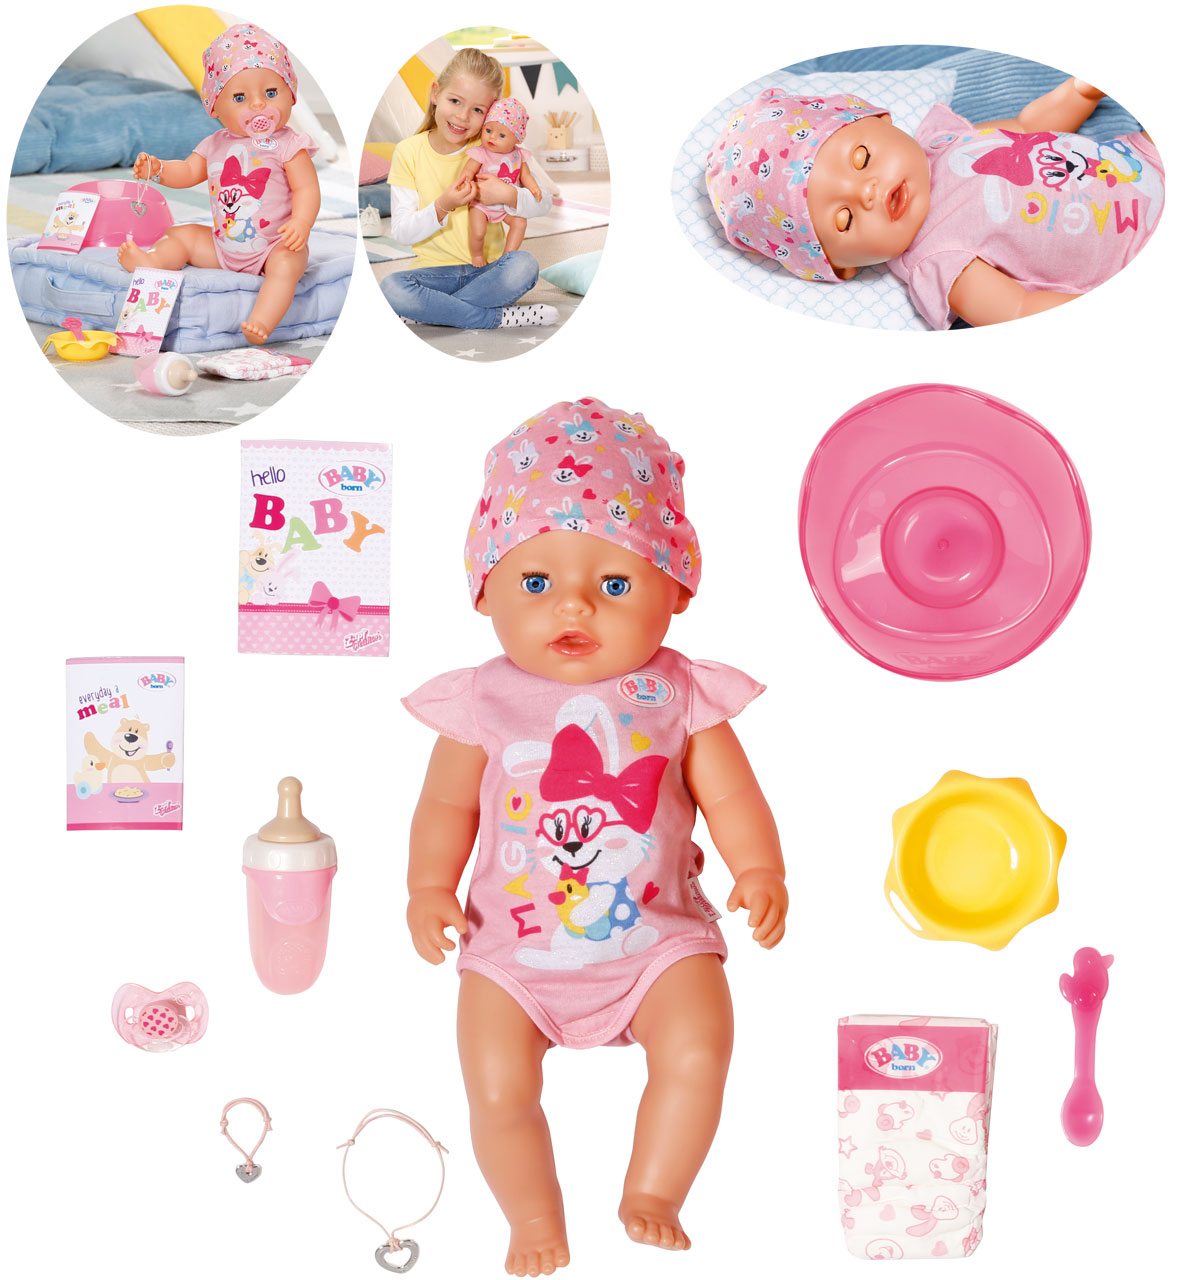 ✔️ ZAPF CREATION® Baby 43 Magic Girl (Rosa) Puppe | Spielzeug24 cm Born